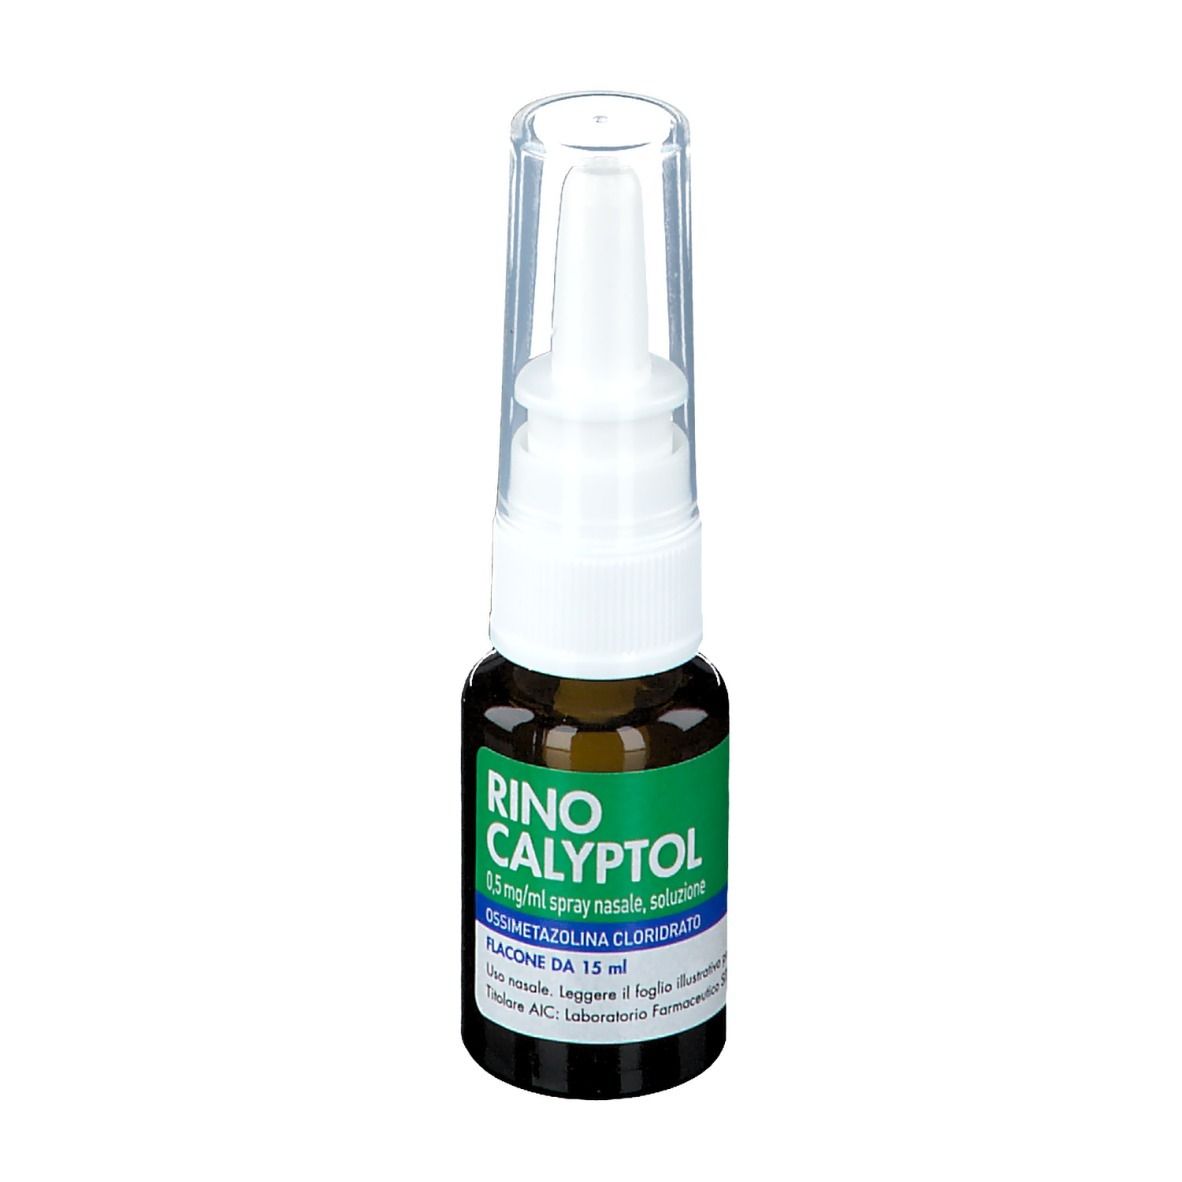 RINOCALYPTOL Spray Nasale